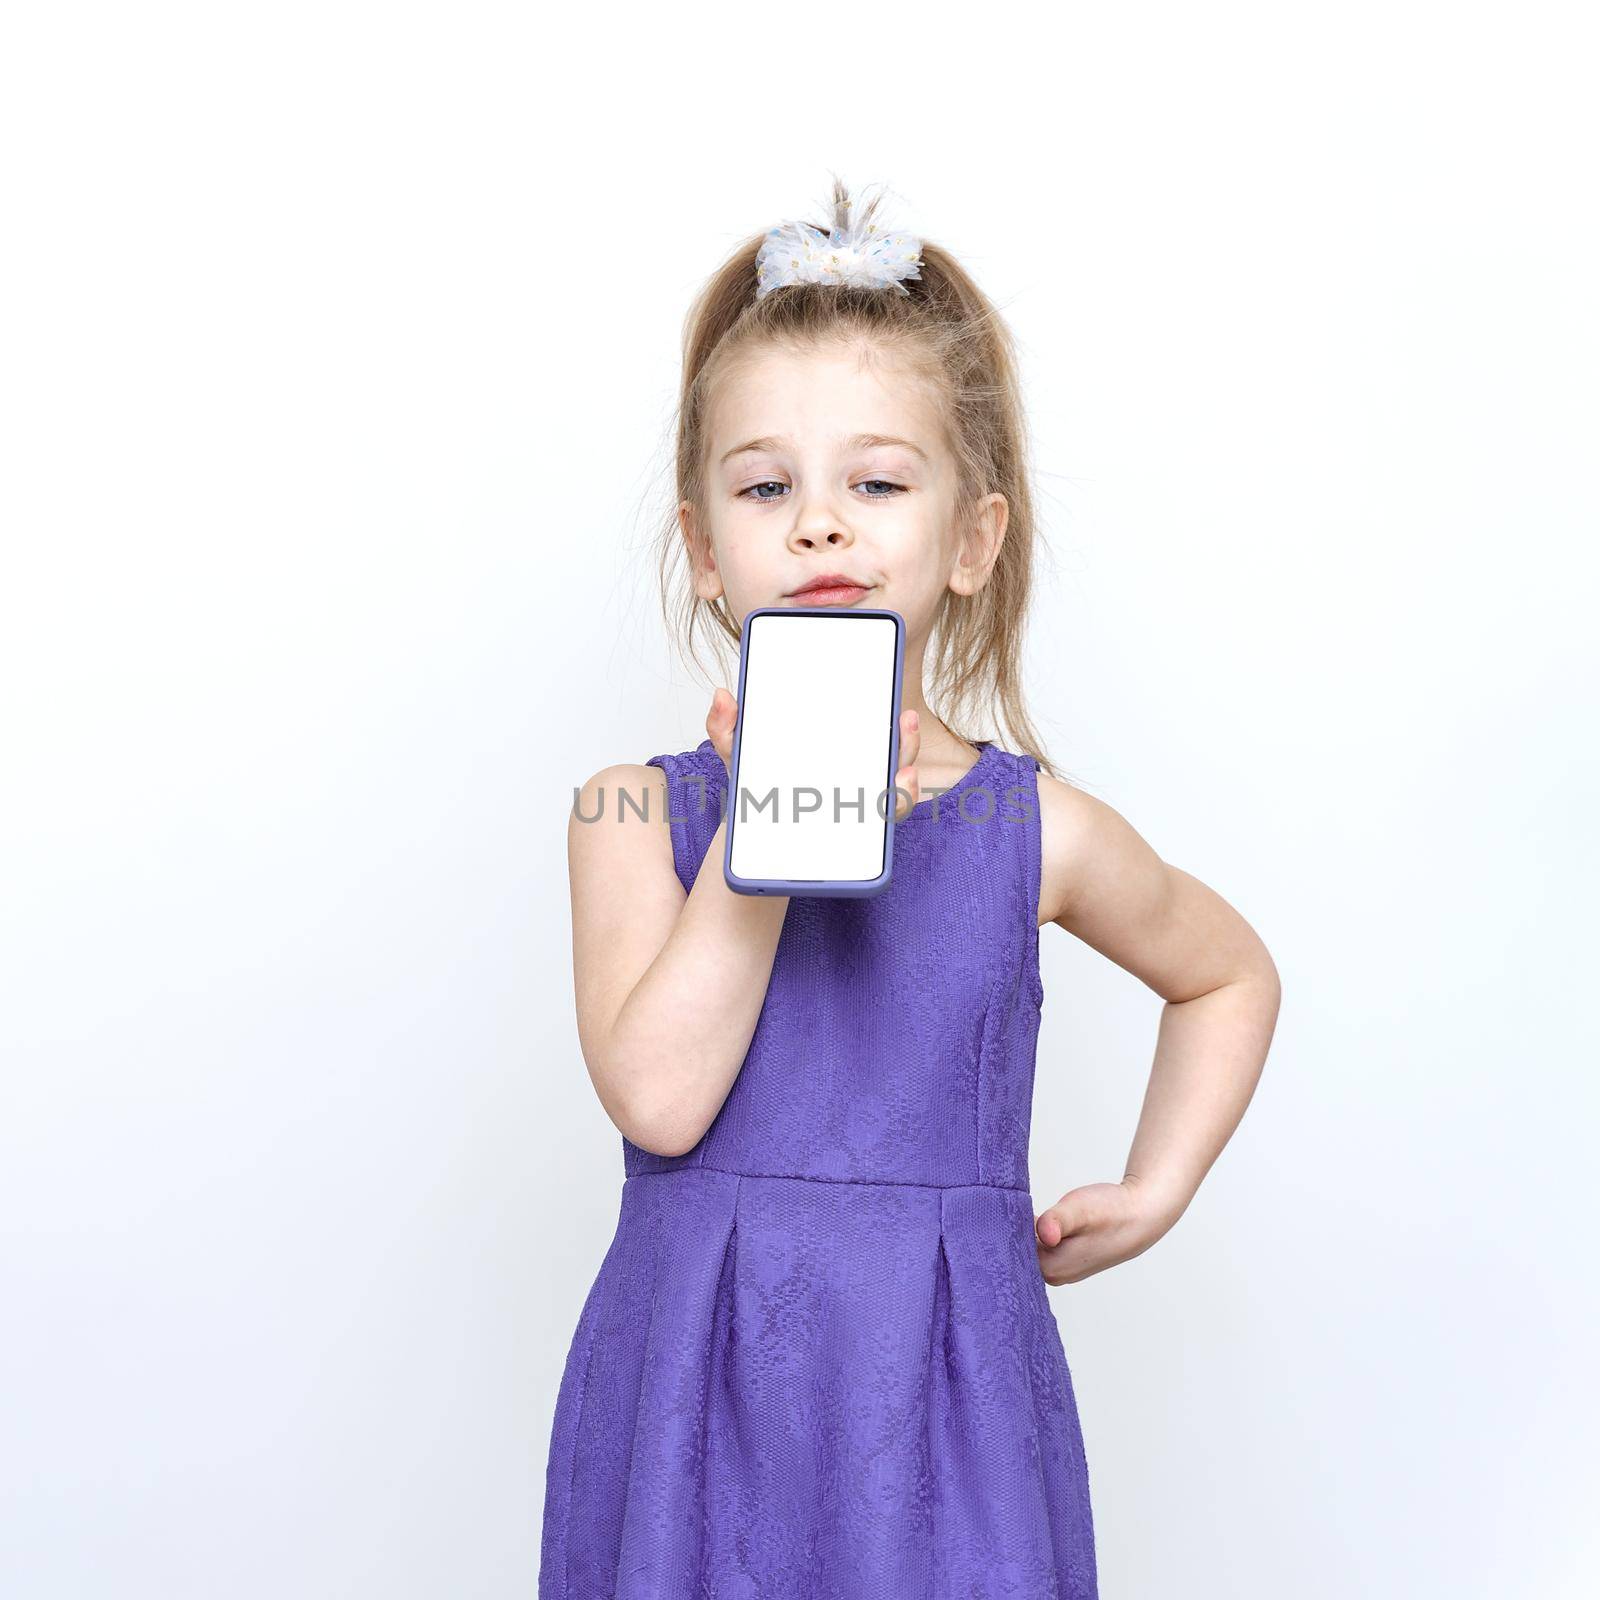 cute 5-6 year old girl in a blue dress posing in the studio. child talking on speakerphone, smartphone mockup